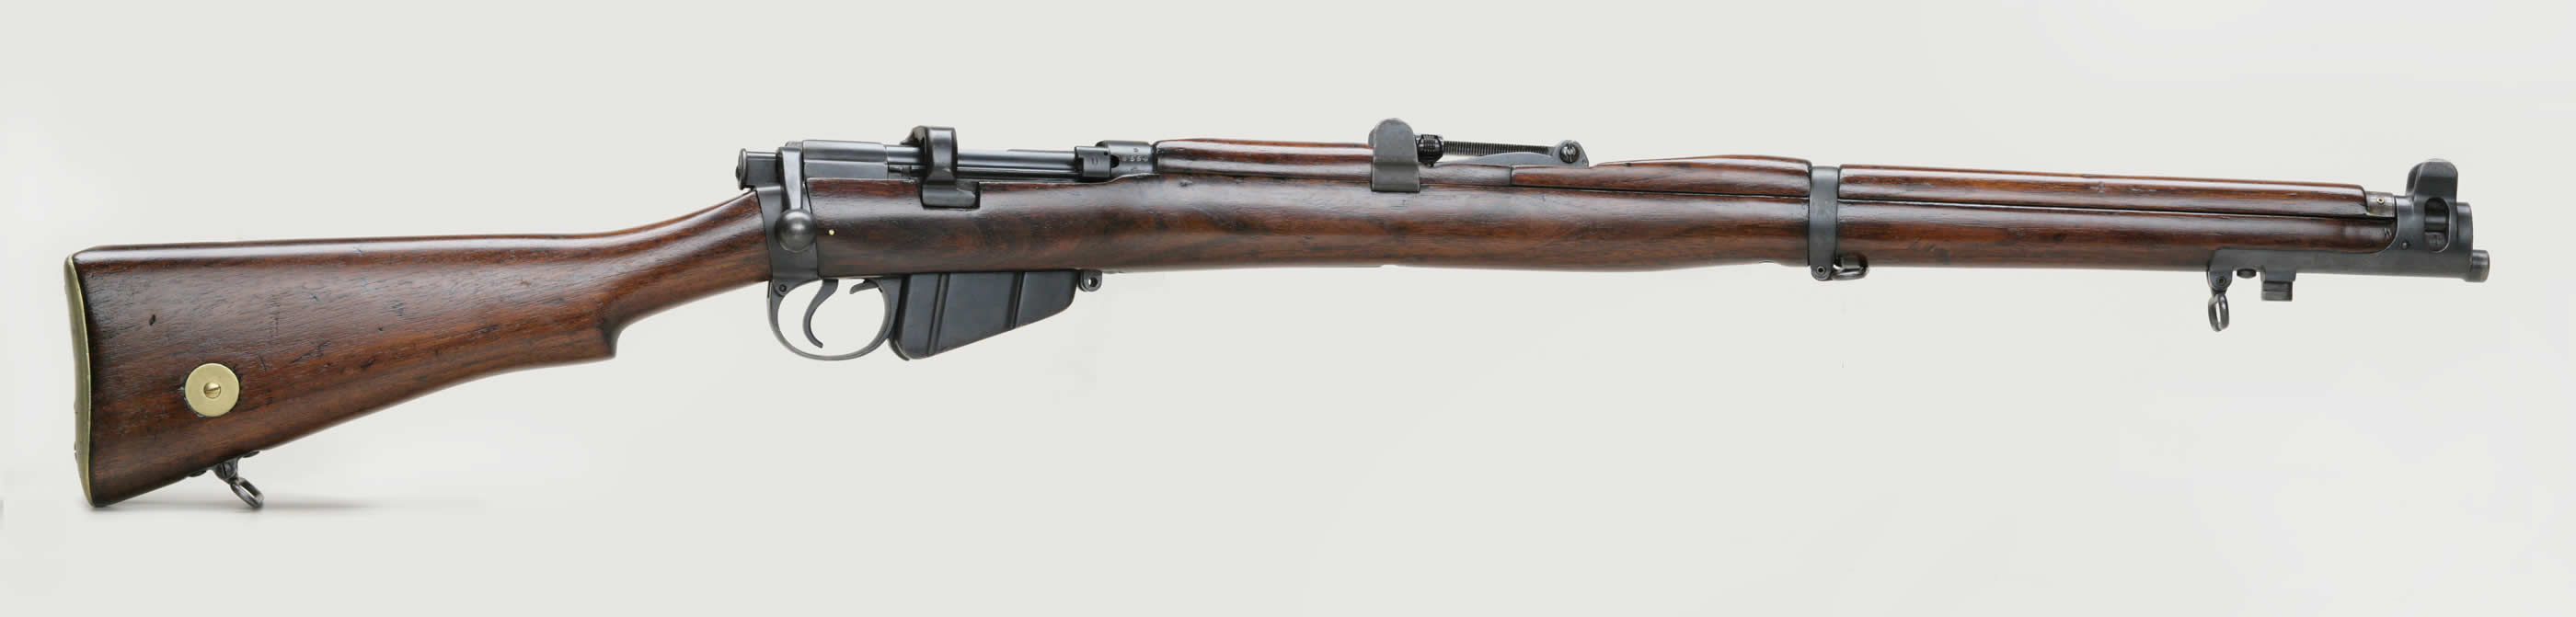 Lee-Enfield Rifle No. 1 MK 3*